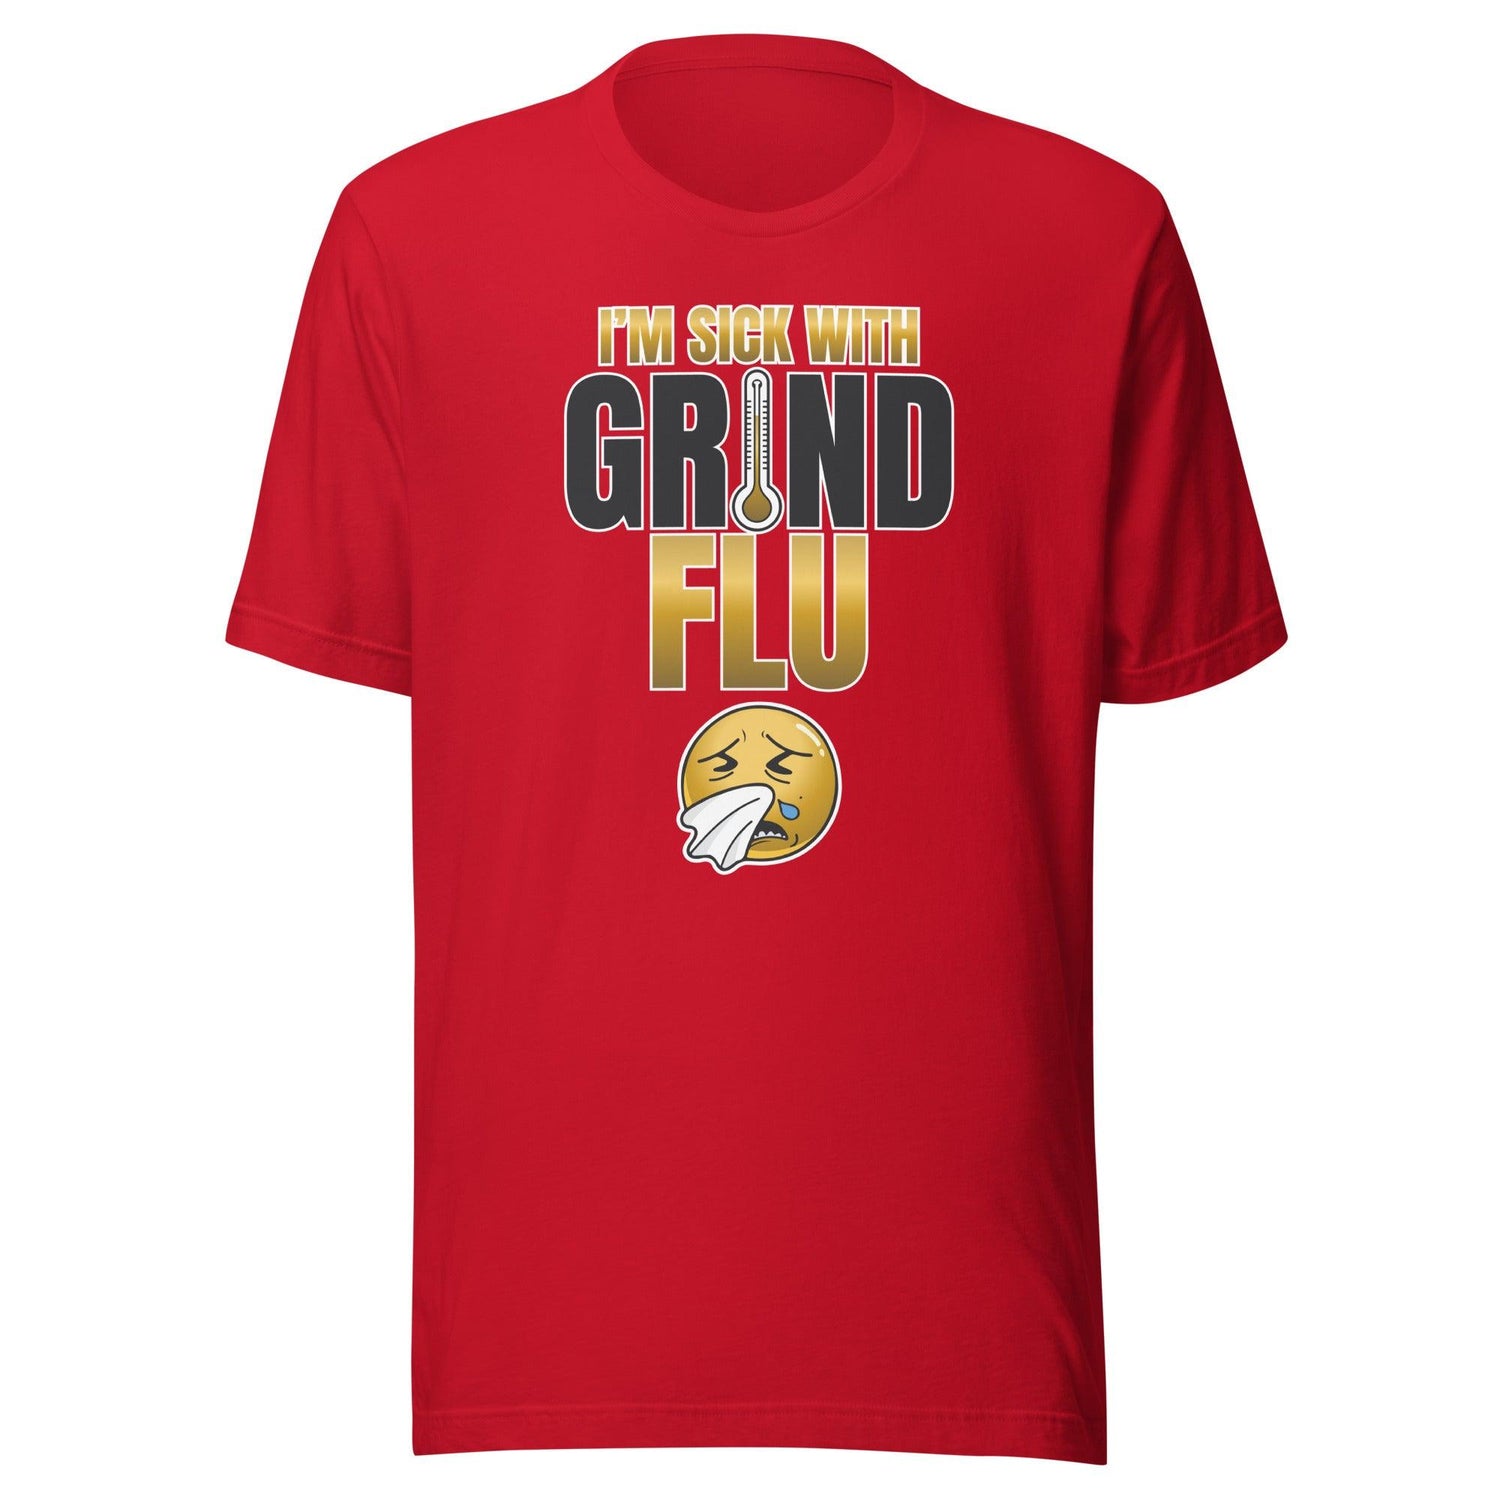 DJ Swearinger "Sick With Grindflu" t-shirt - Fan Arch